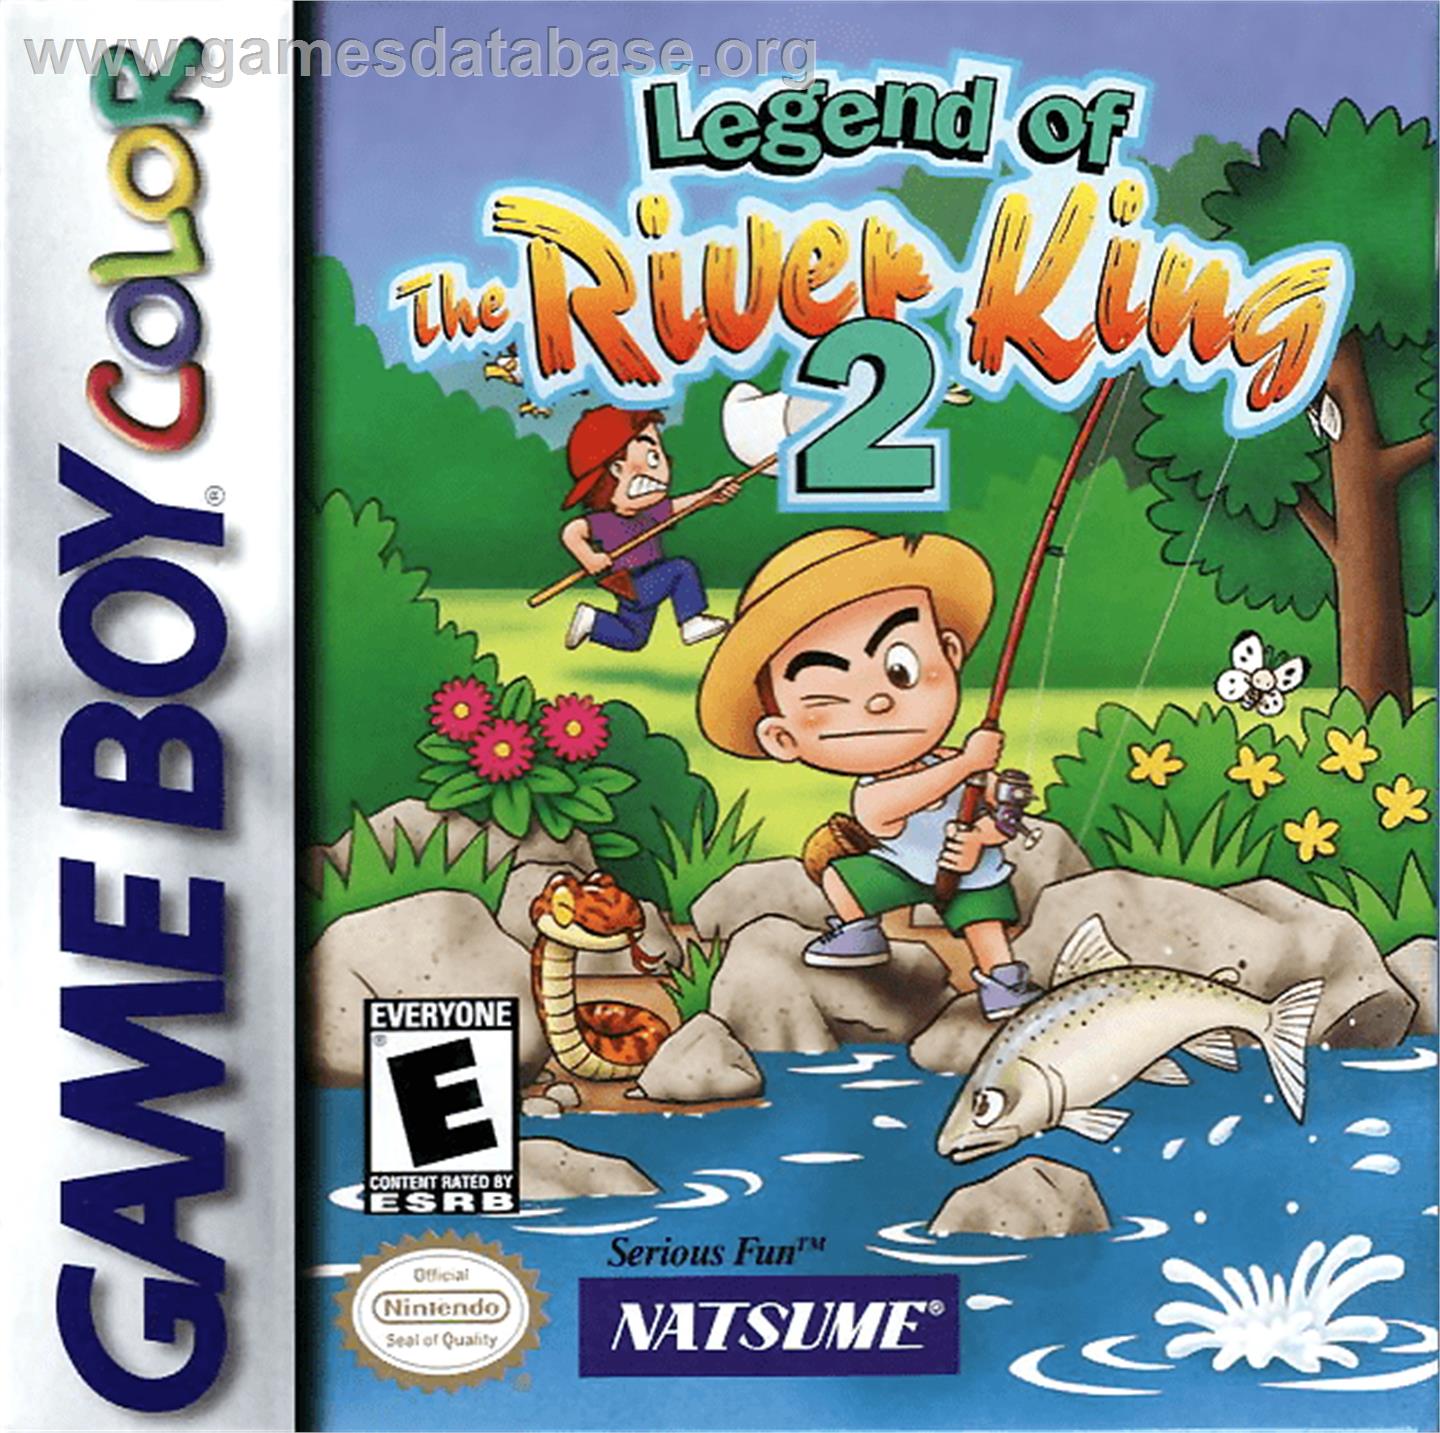 Legend of the River King 2 - Nintendo Game Boy Color - Artwork - Box